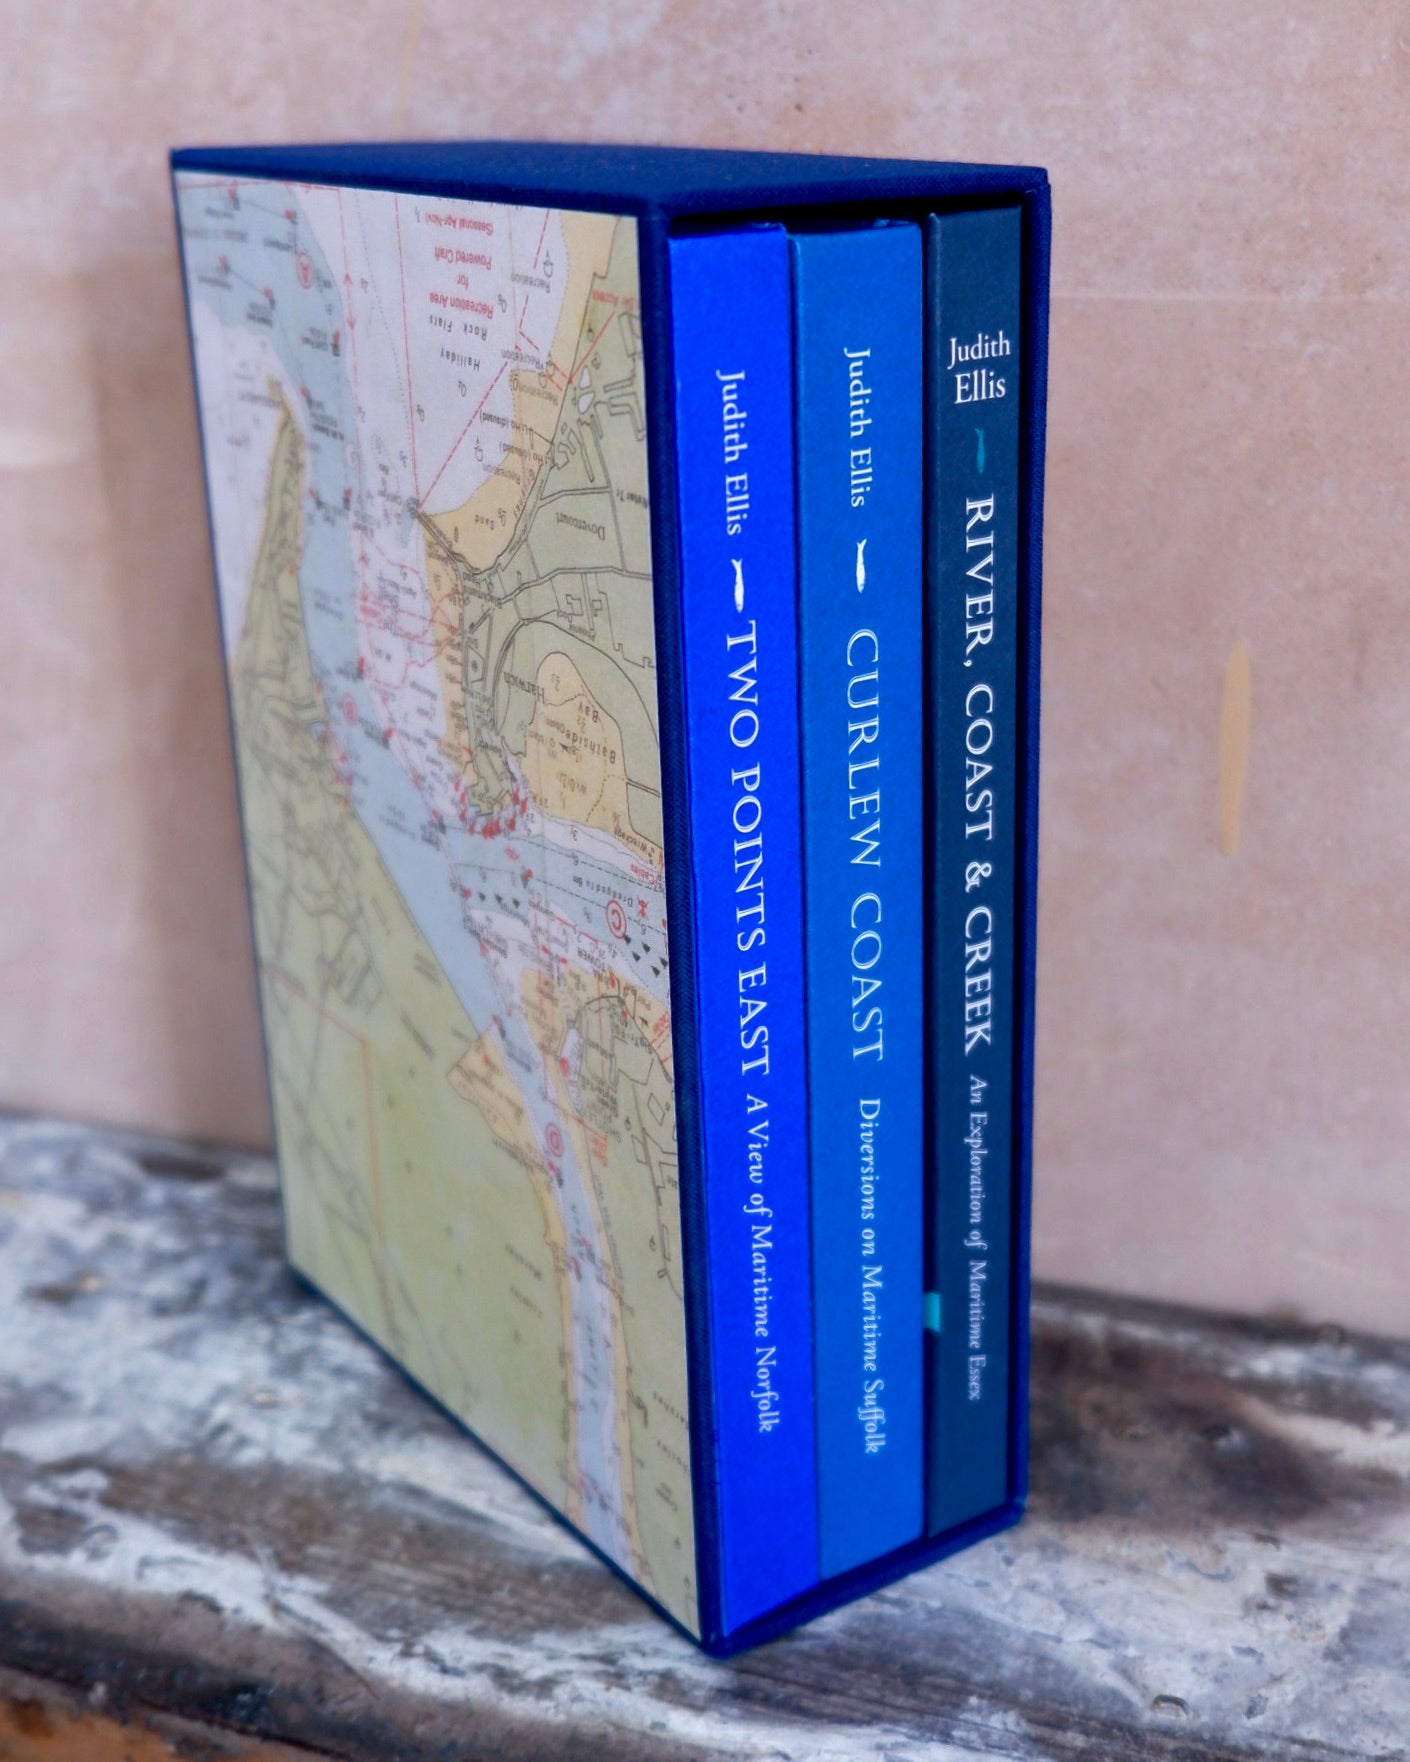 Slipcase set of 3 books by Judith Ellis